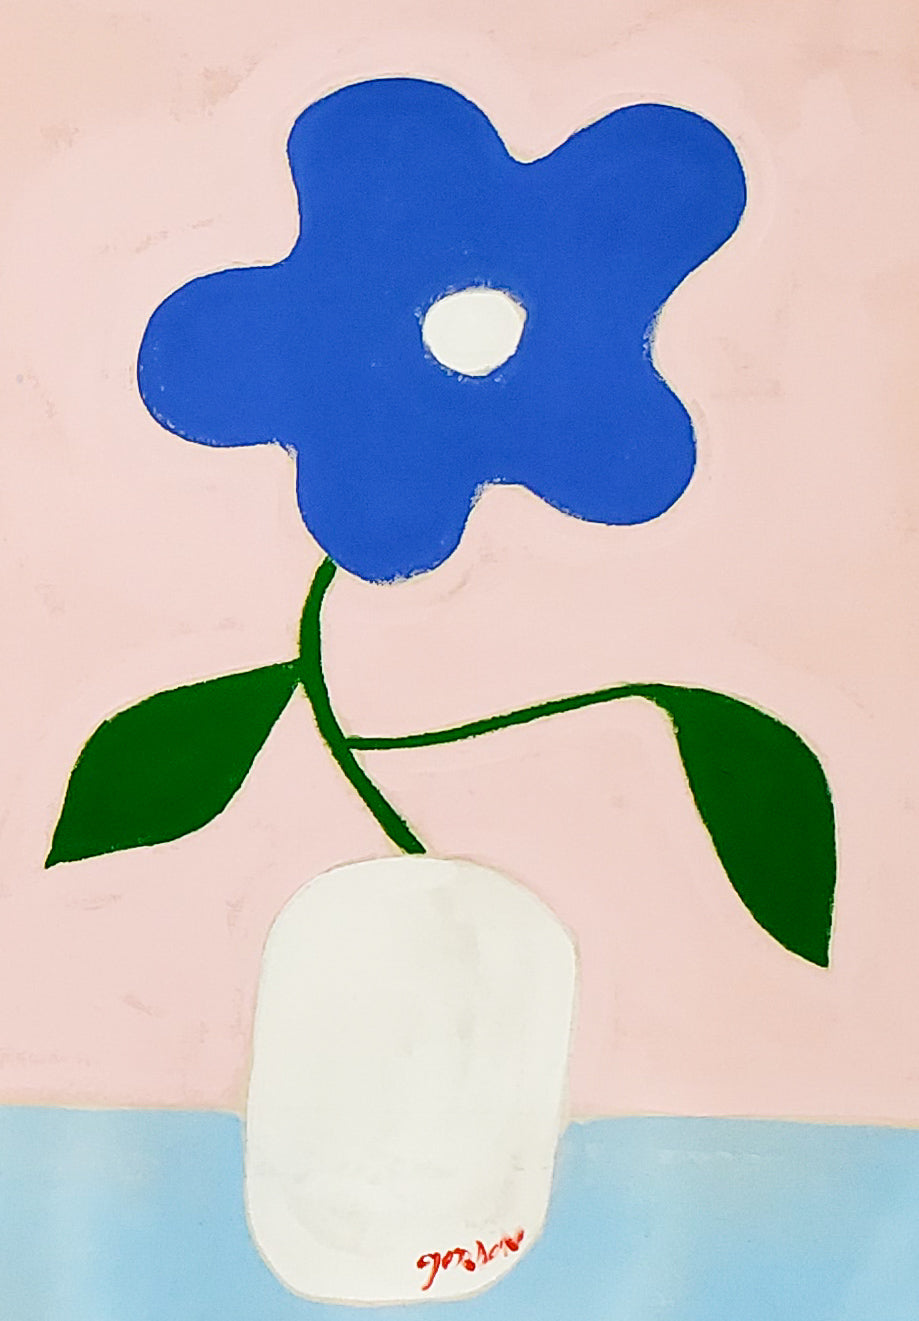 Gordan Douglas Ball, "Blue Flower"